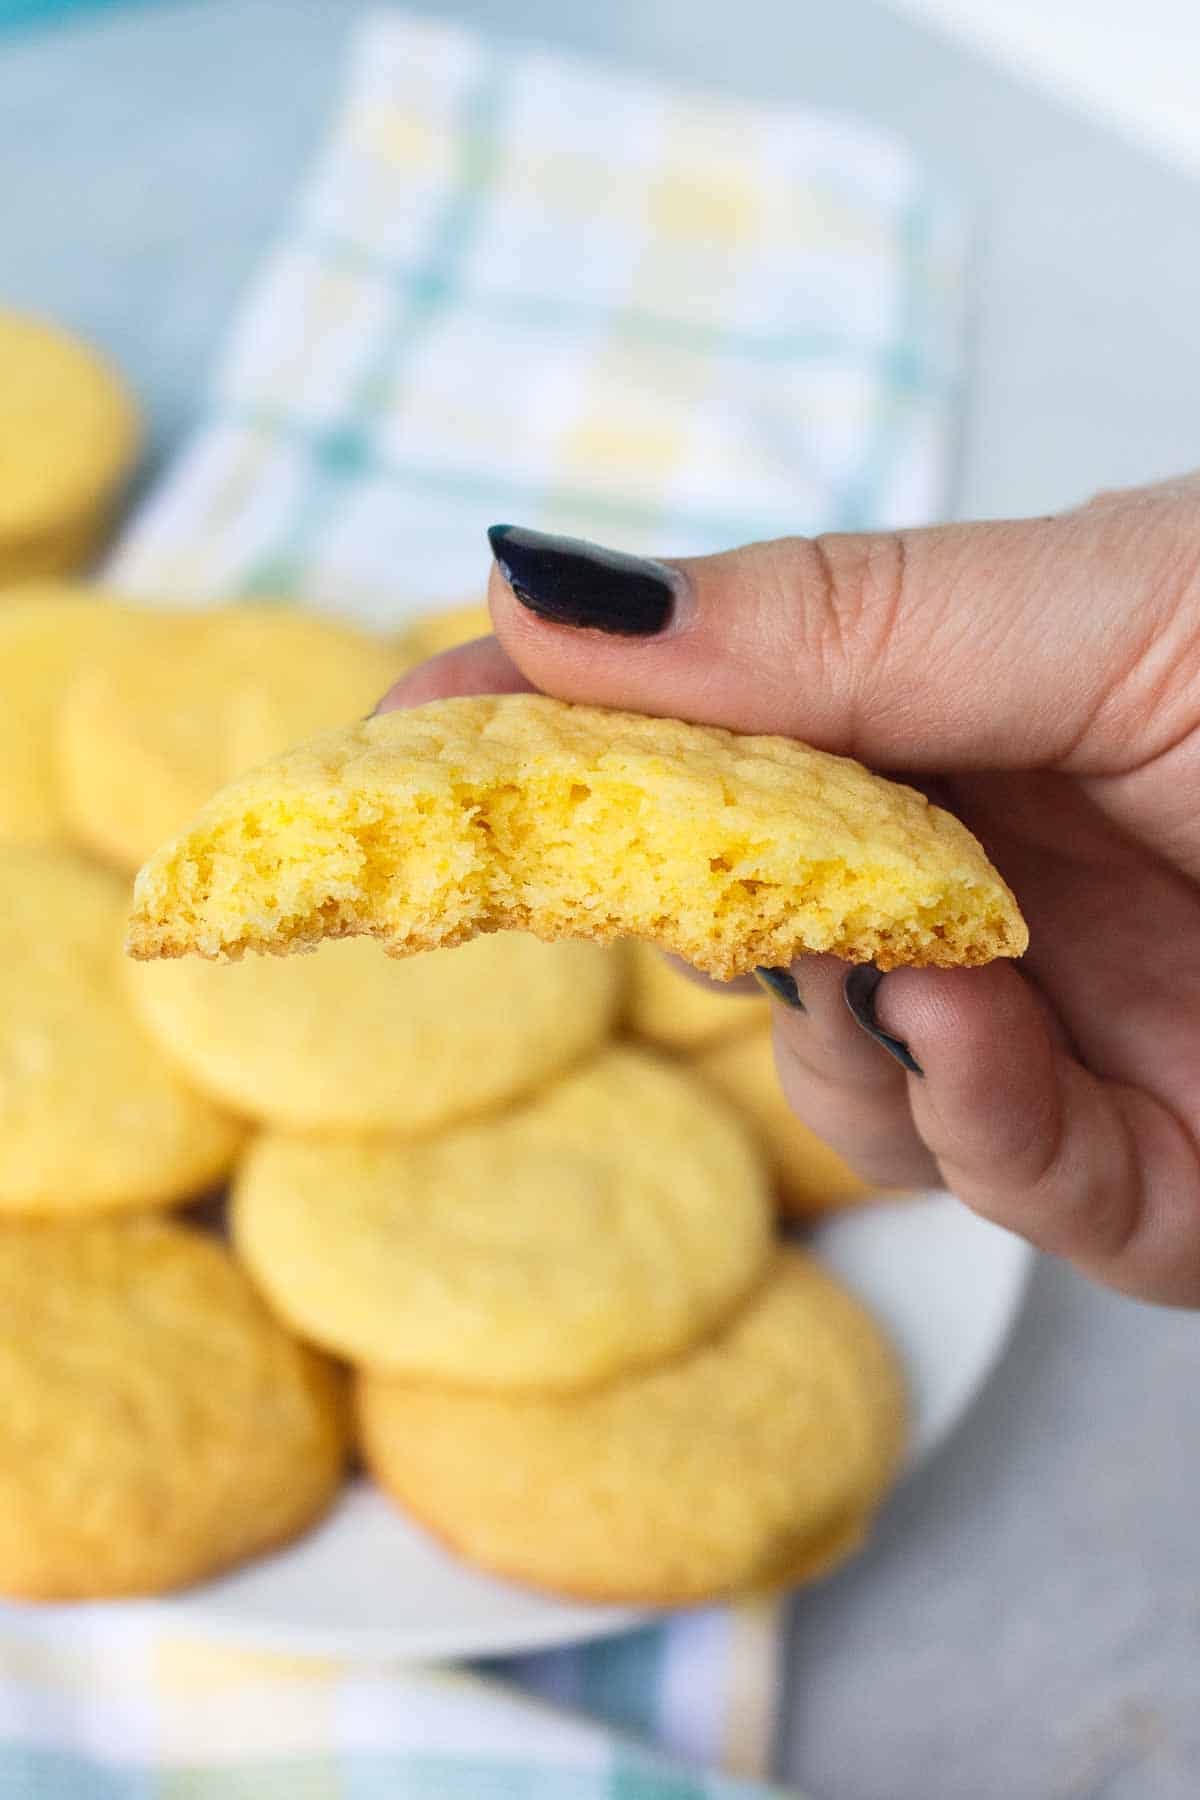 Lemon cookie bit in half to show soft texture